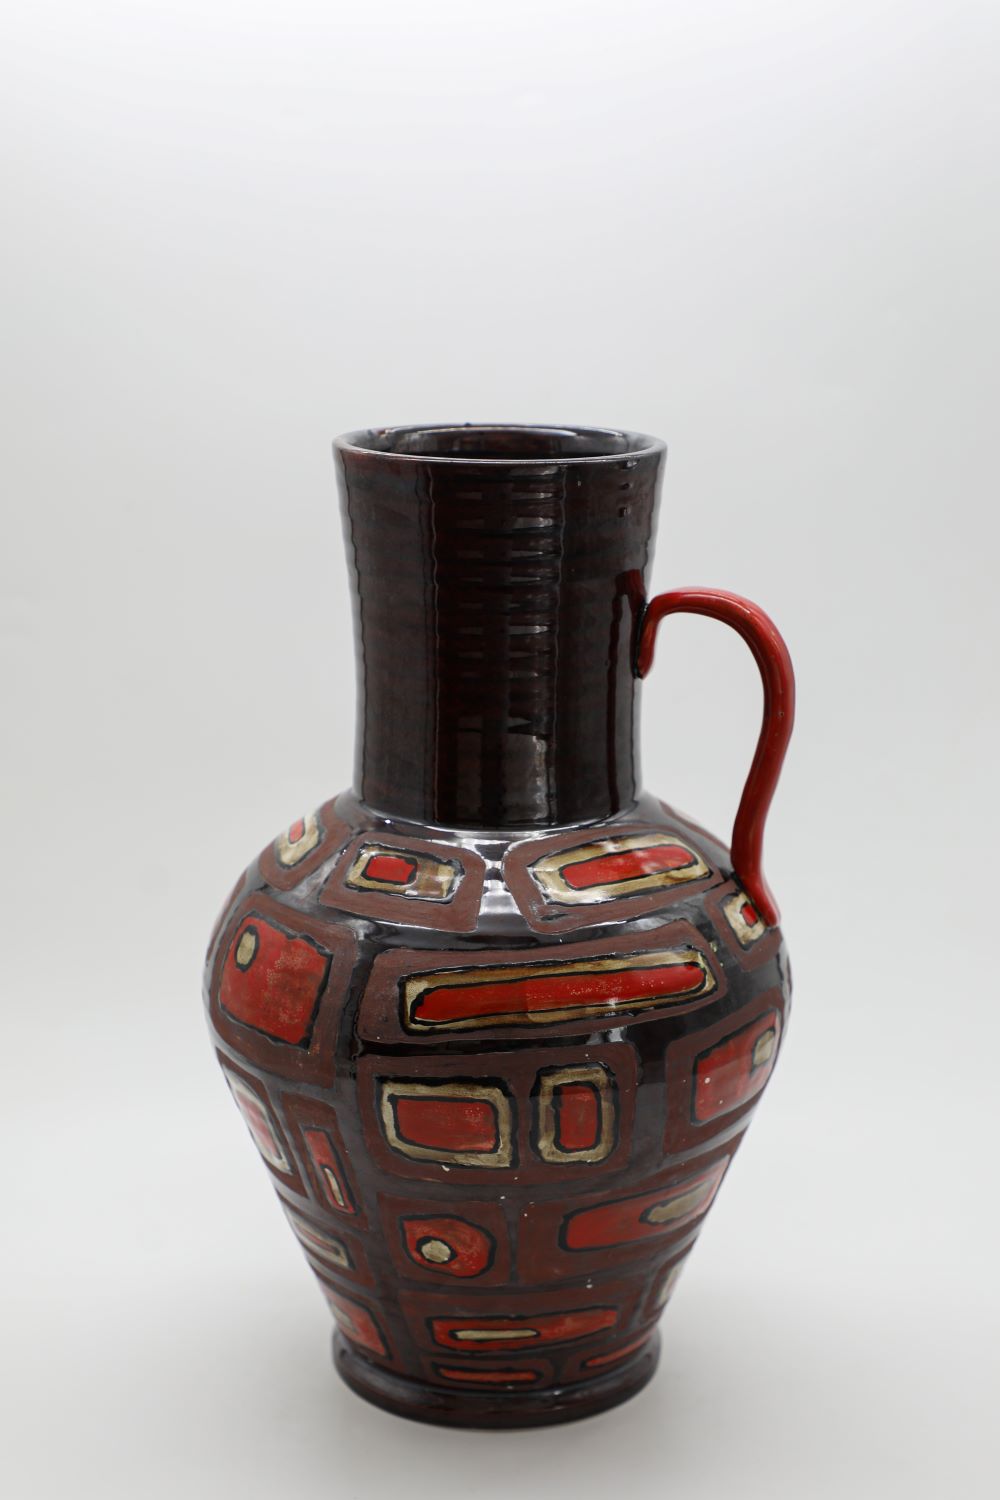 Vase of Windows - Vietnamese Ceramic Artwork by Artist Nguyen Thu Thuy